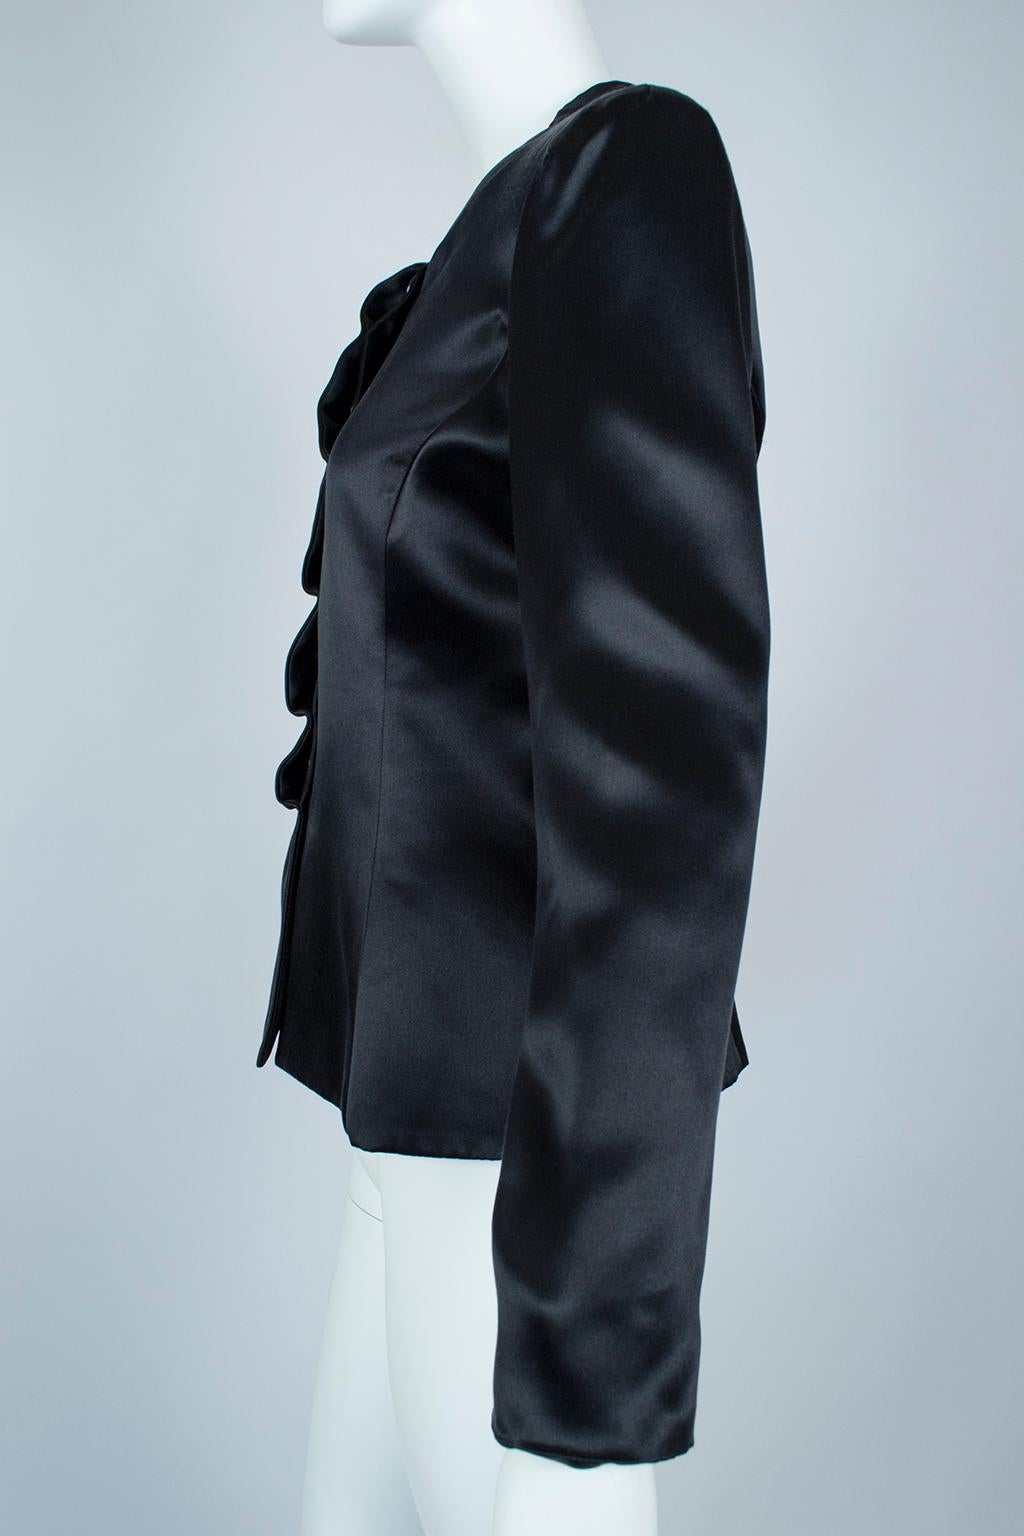 Giorgio Armani Black Lacquered Satin Ruffle Placket Evening Jacket - It 42, 2003 For Sale 3